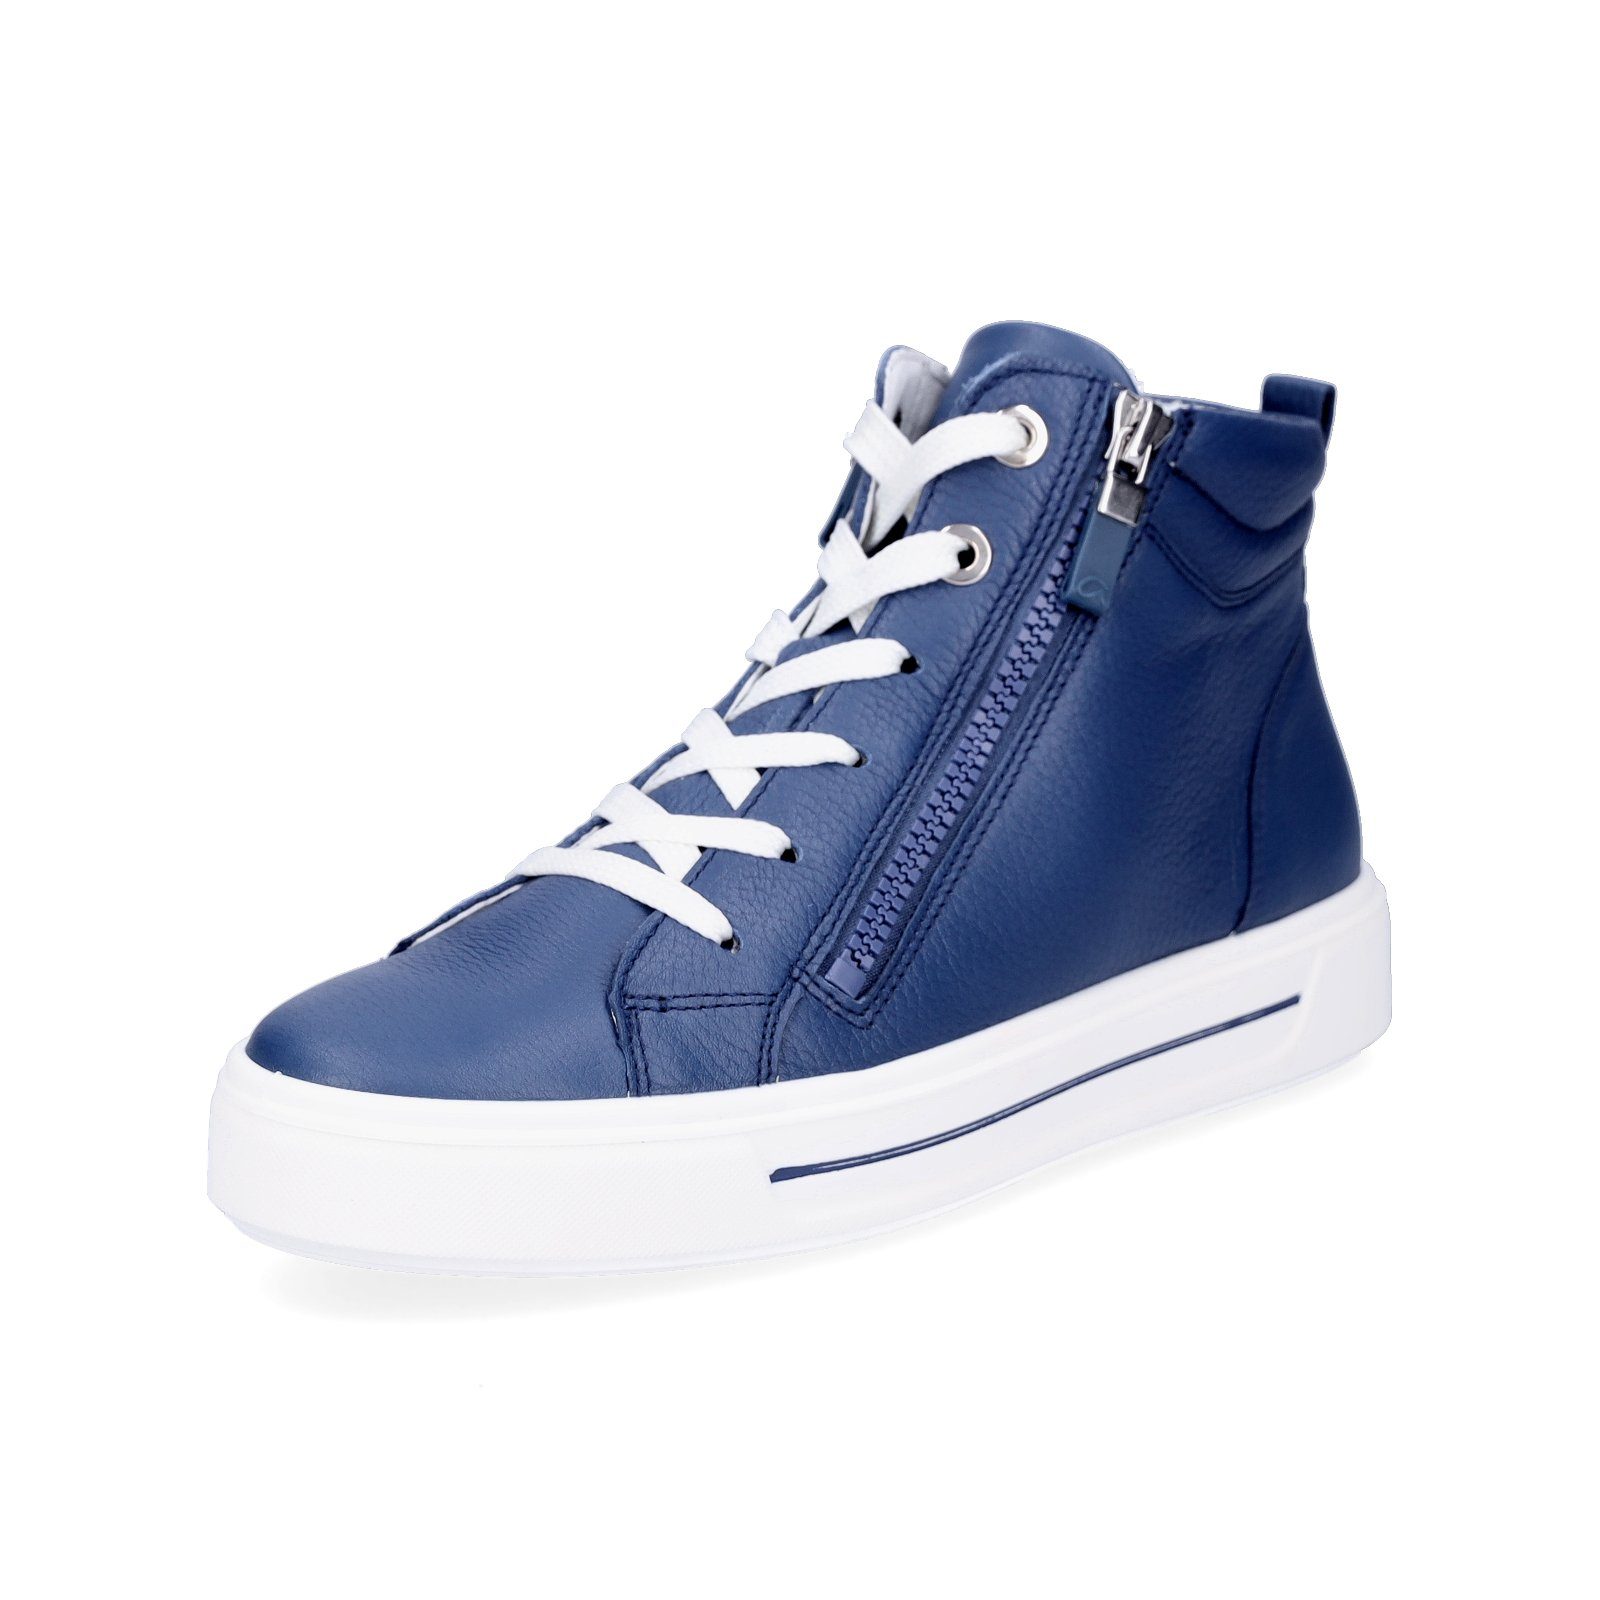 Ara Ara Damen High Leder blau 048006 Sneaker blau Sneaker